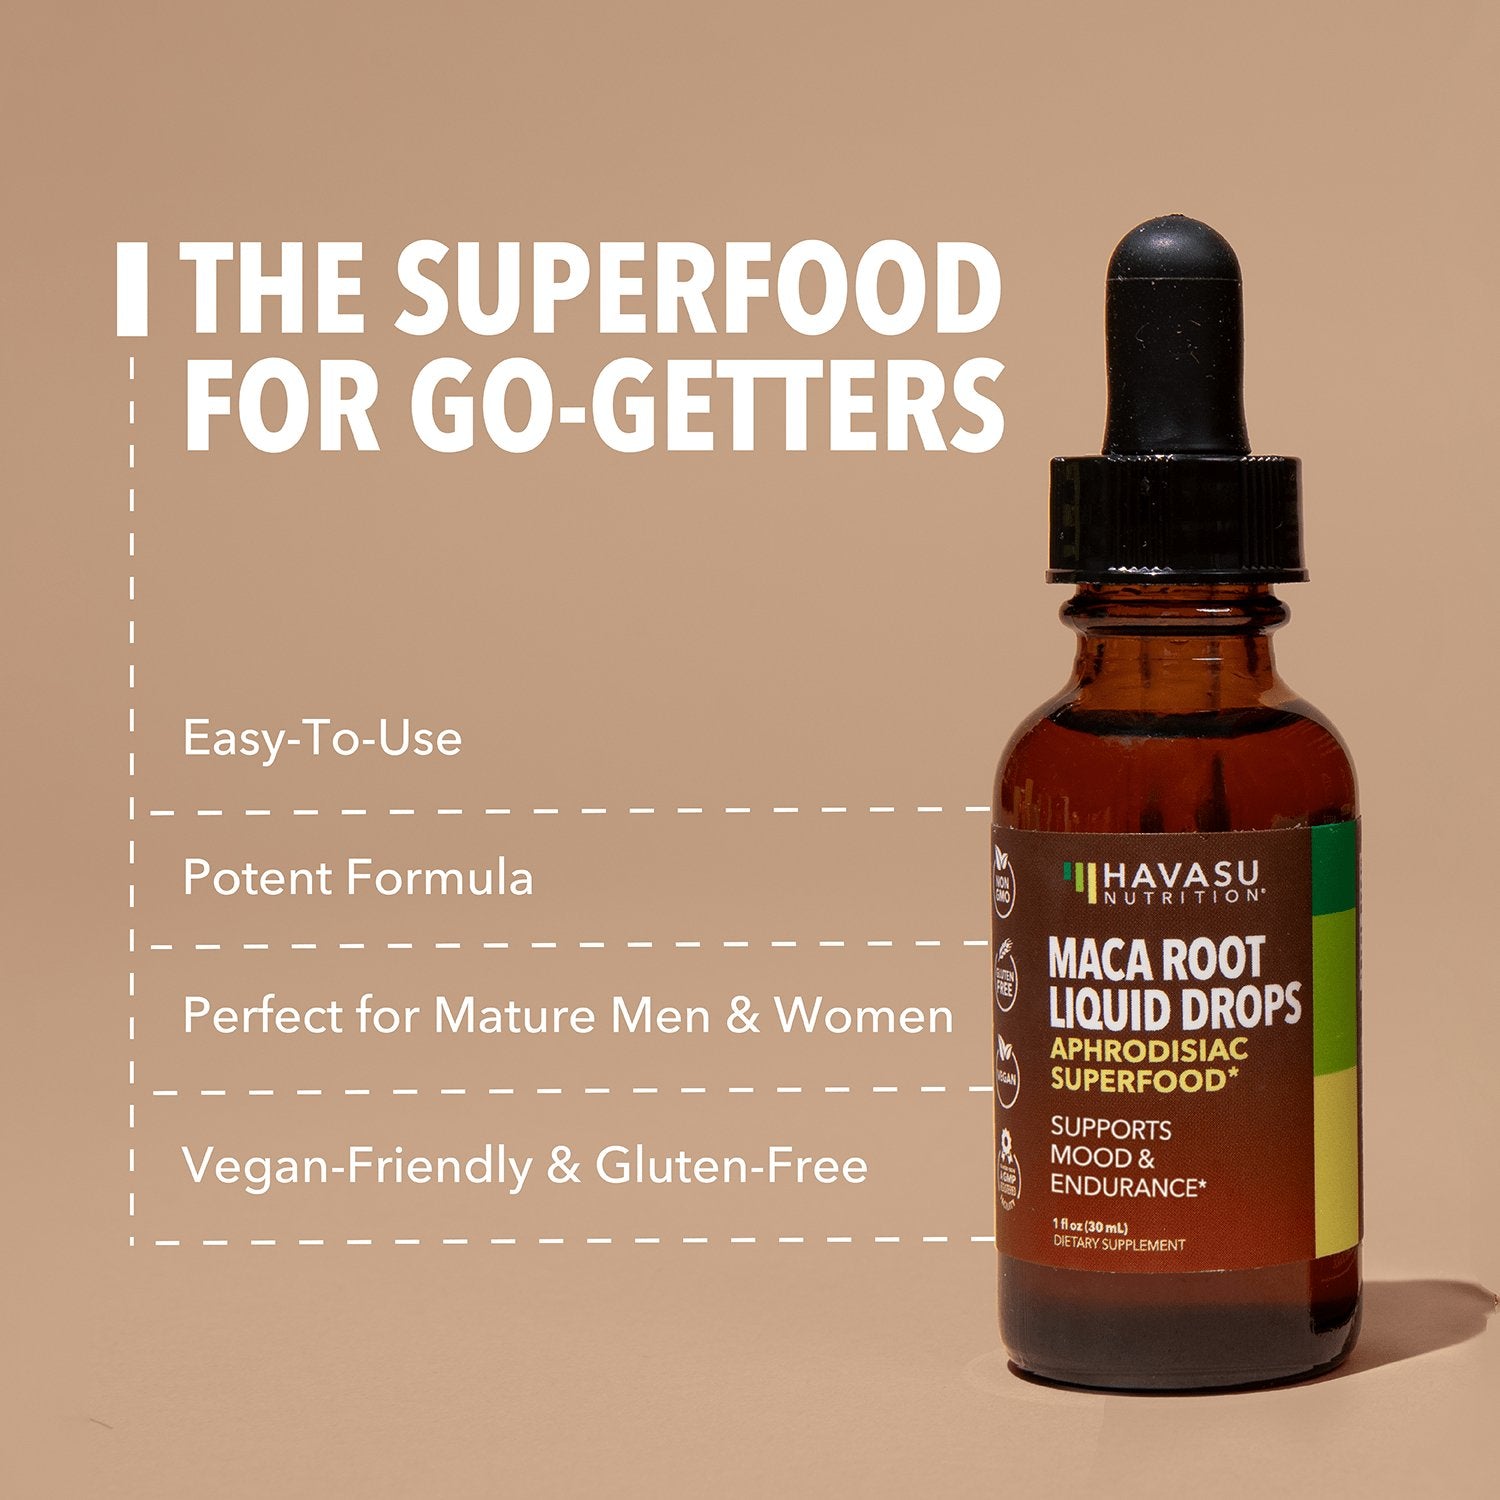 Organic Maca Root Liquid, 1 fl oz (30 mL) - Havasu Nutrition